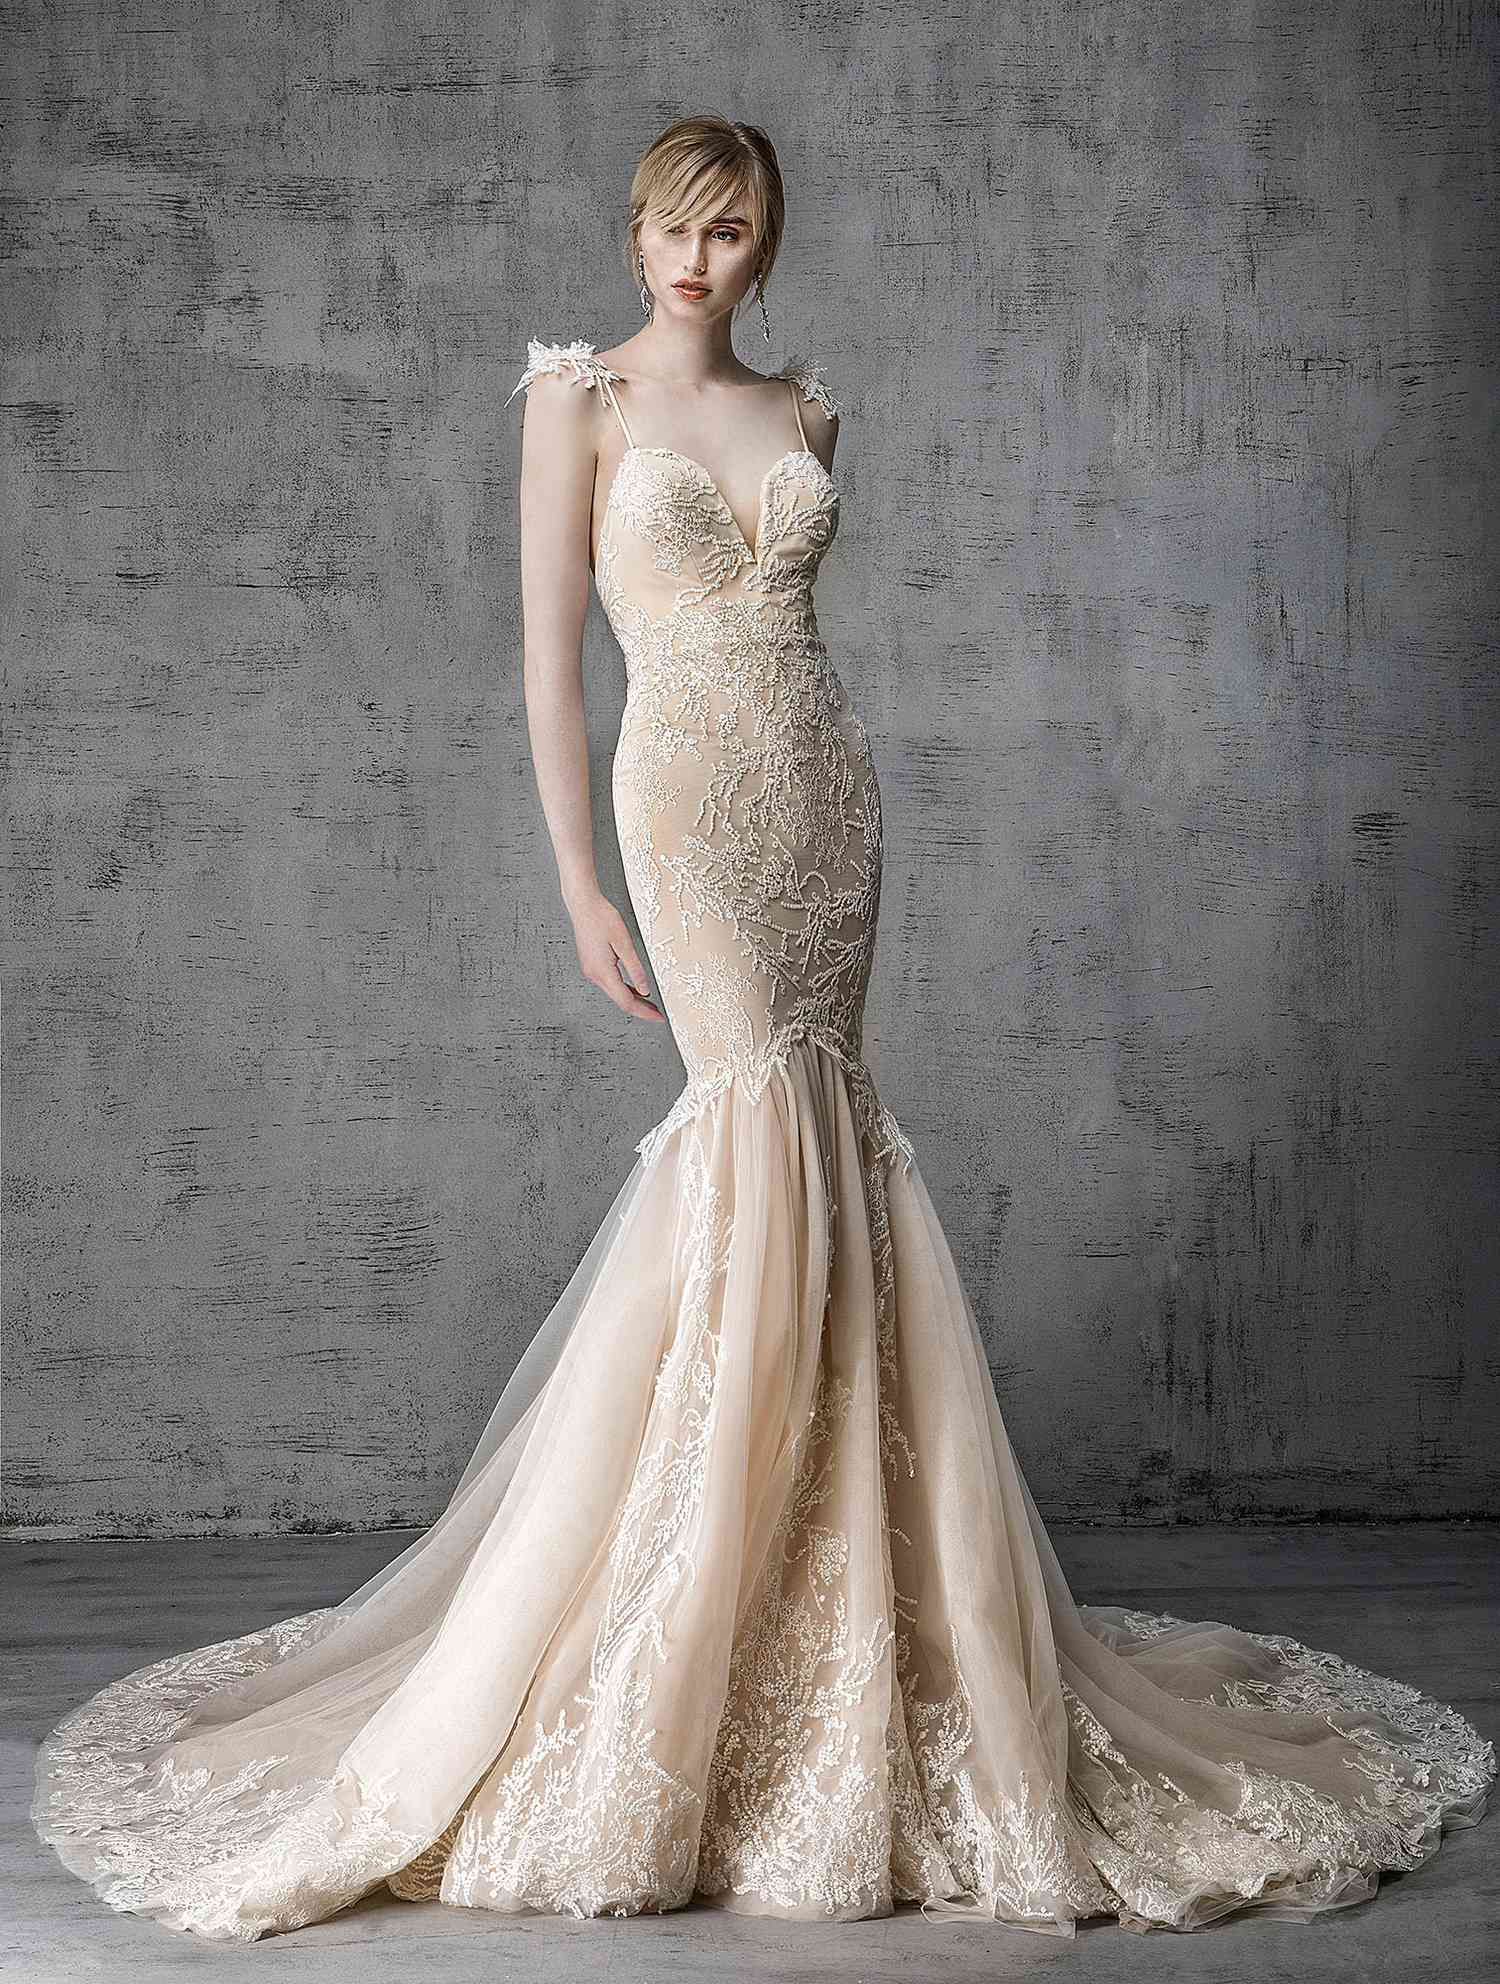 victoria kyriakides wedding dress spring 2019 champagne spaghetti-strap shoulder detail